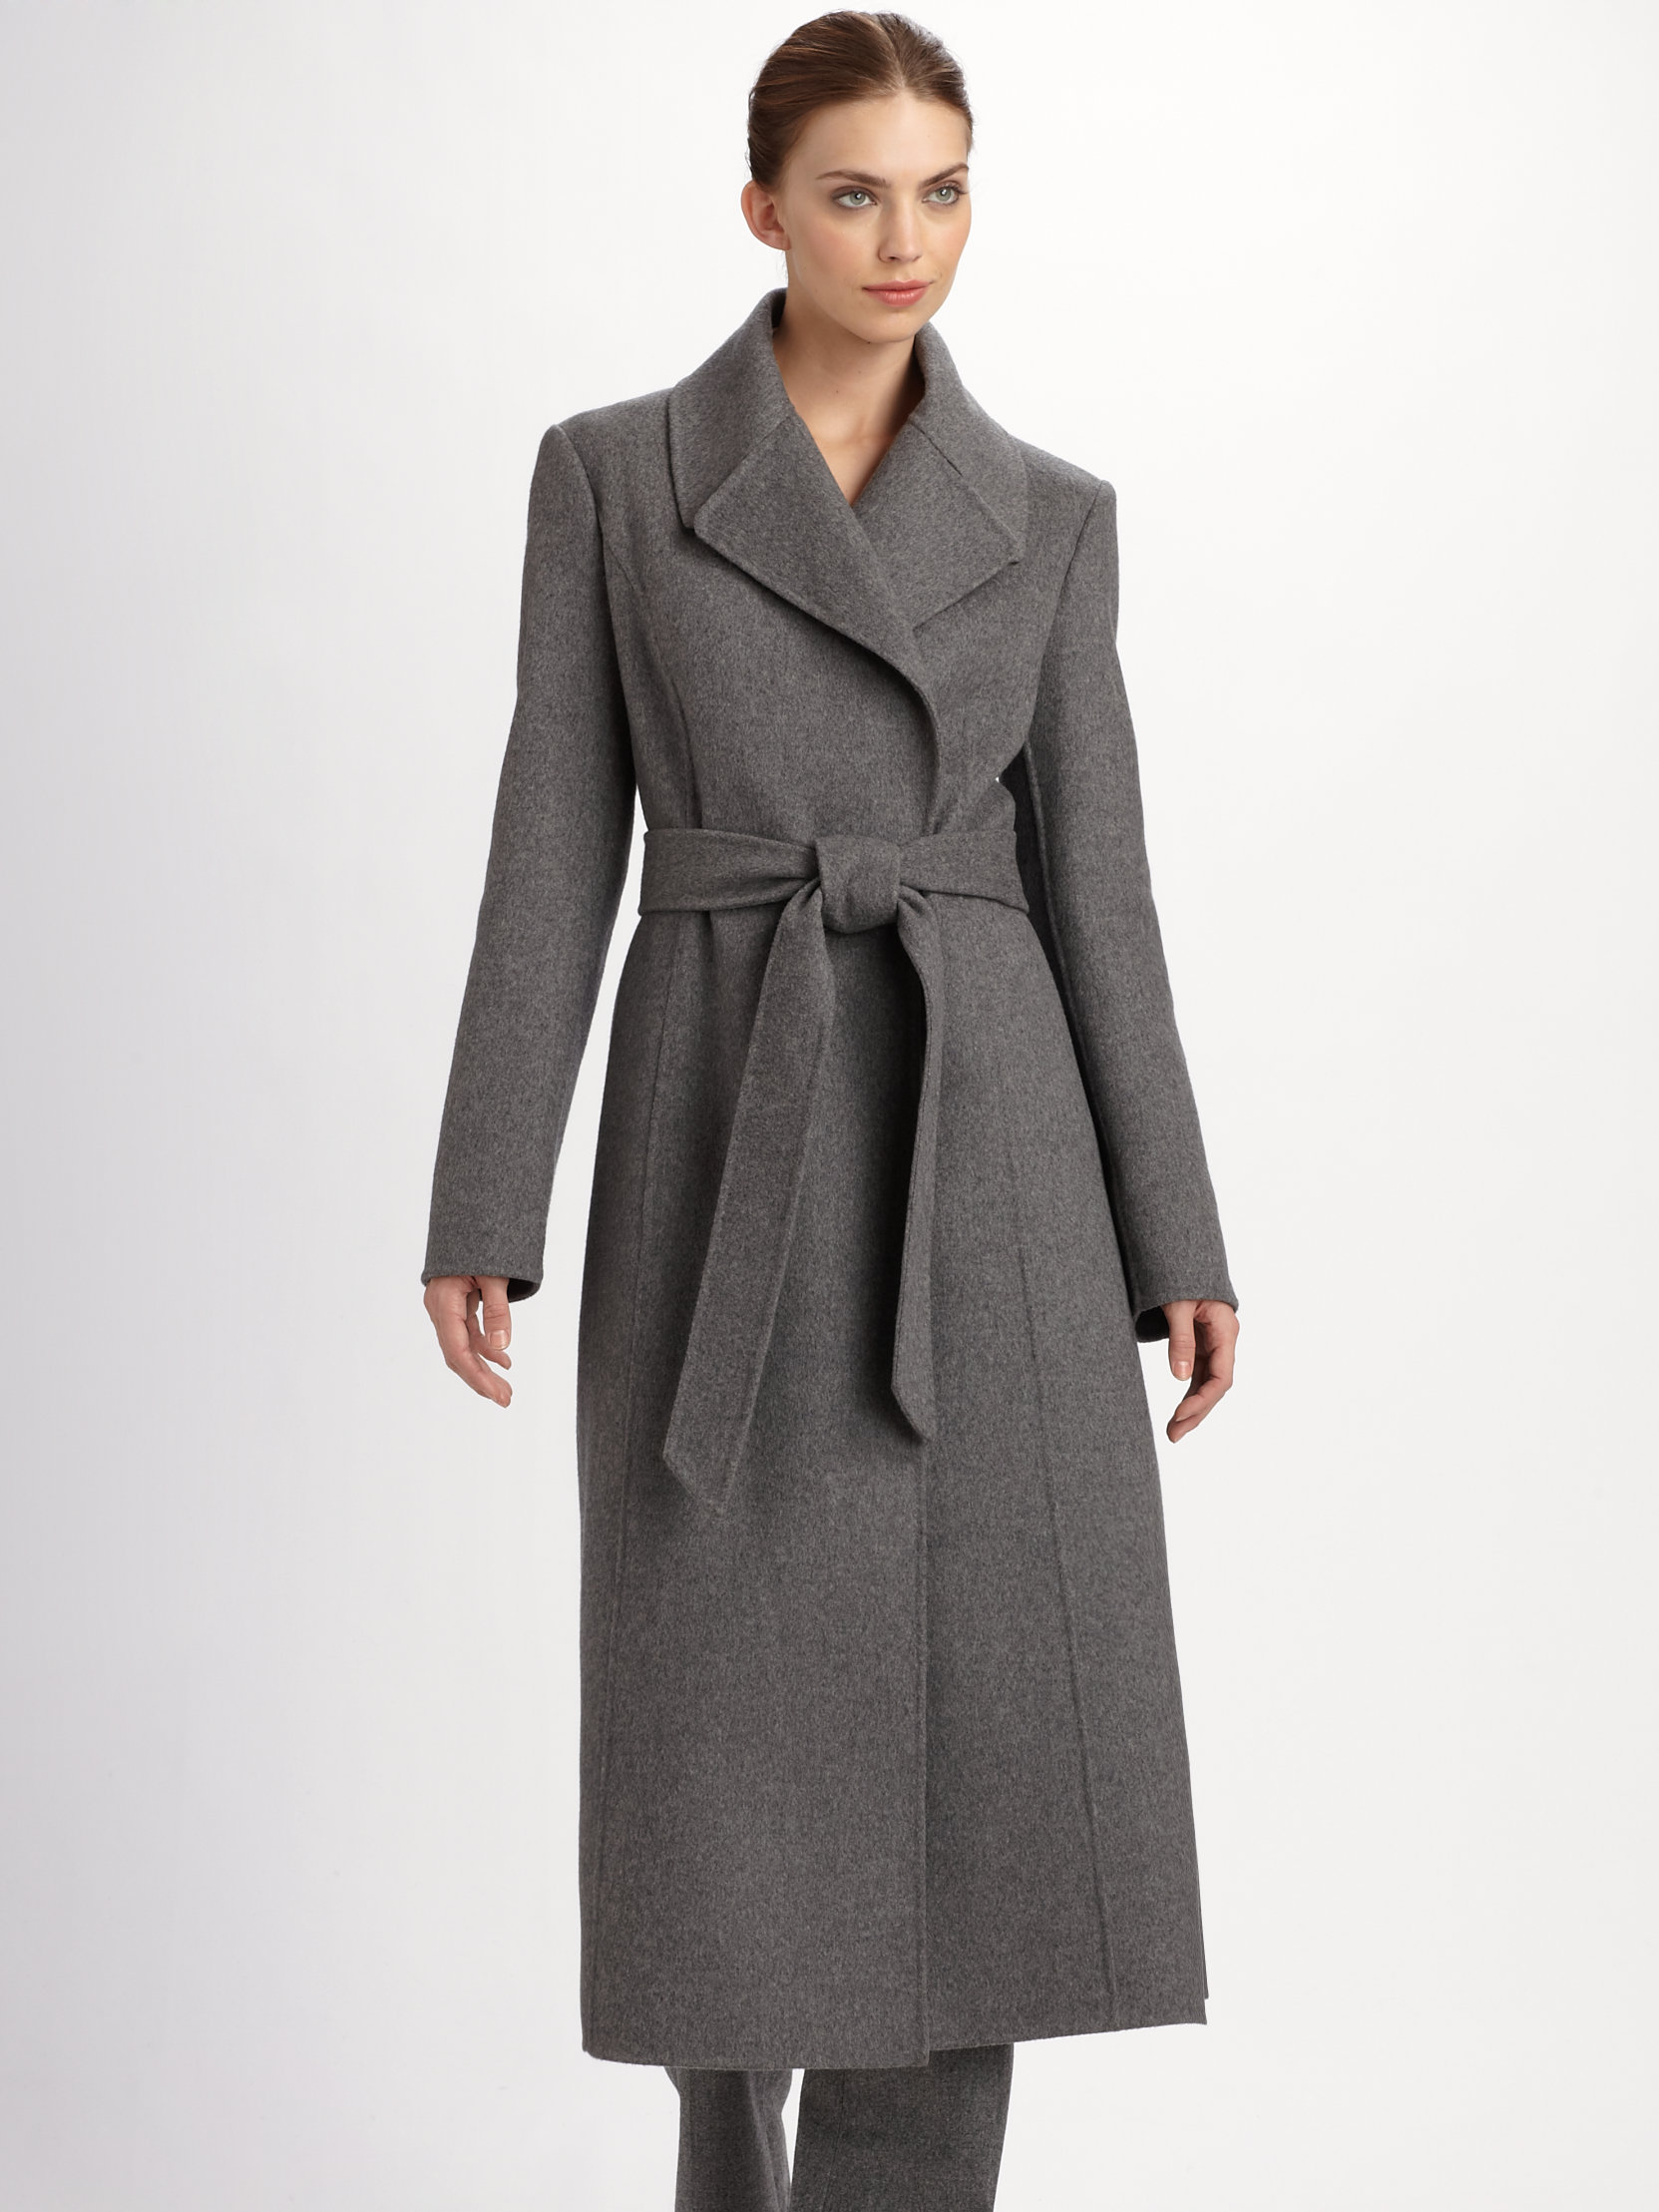 Michael Kors Melange Wool Trench coat in Gray (banker) | Lyst